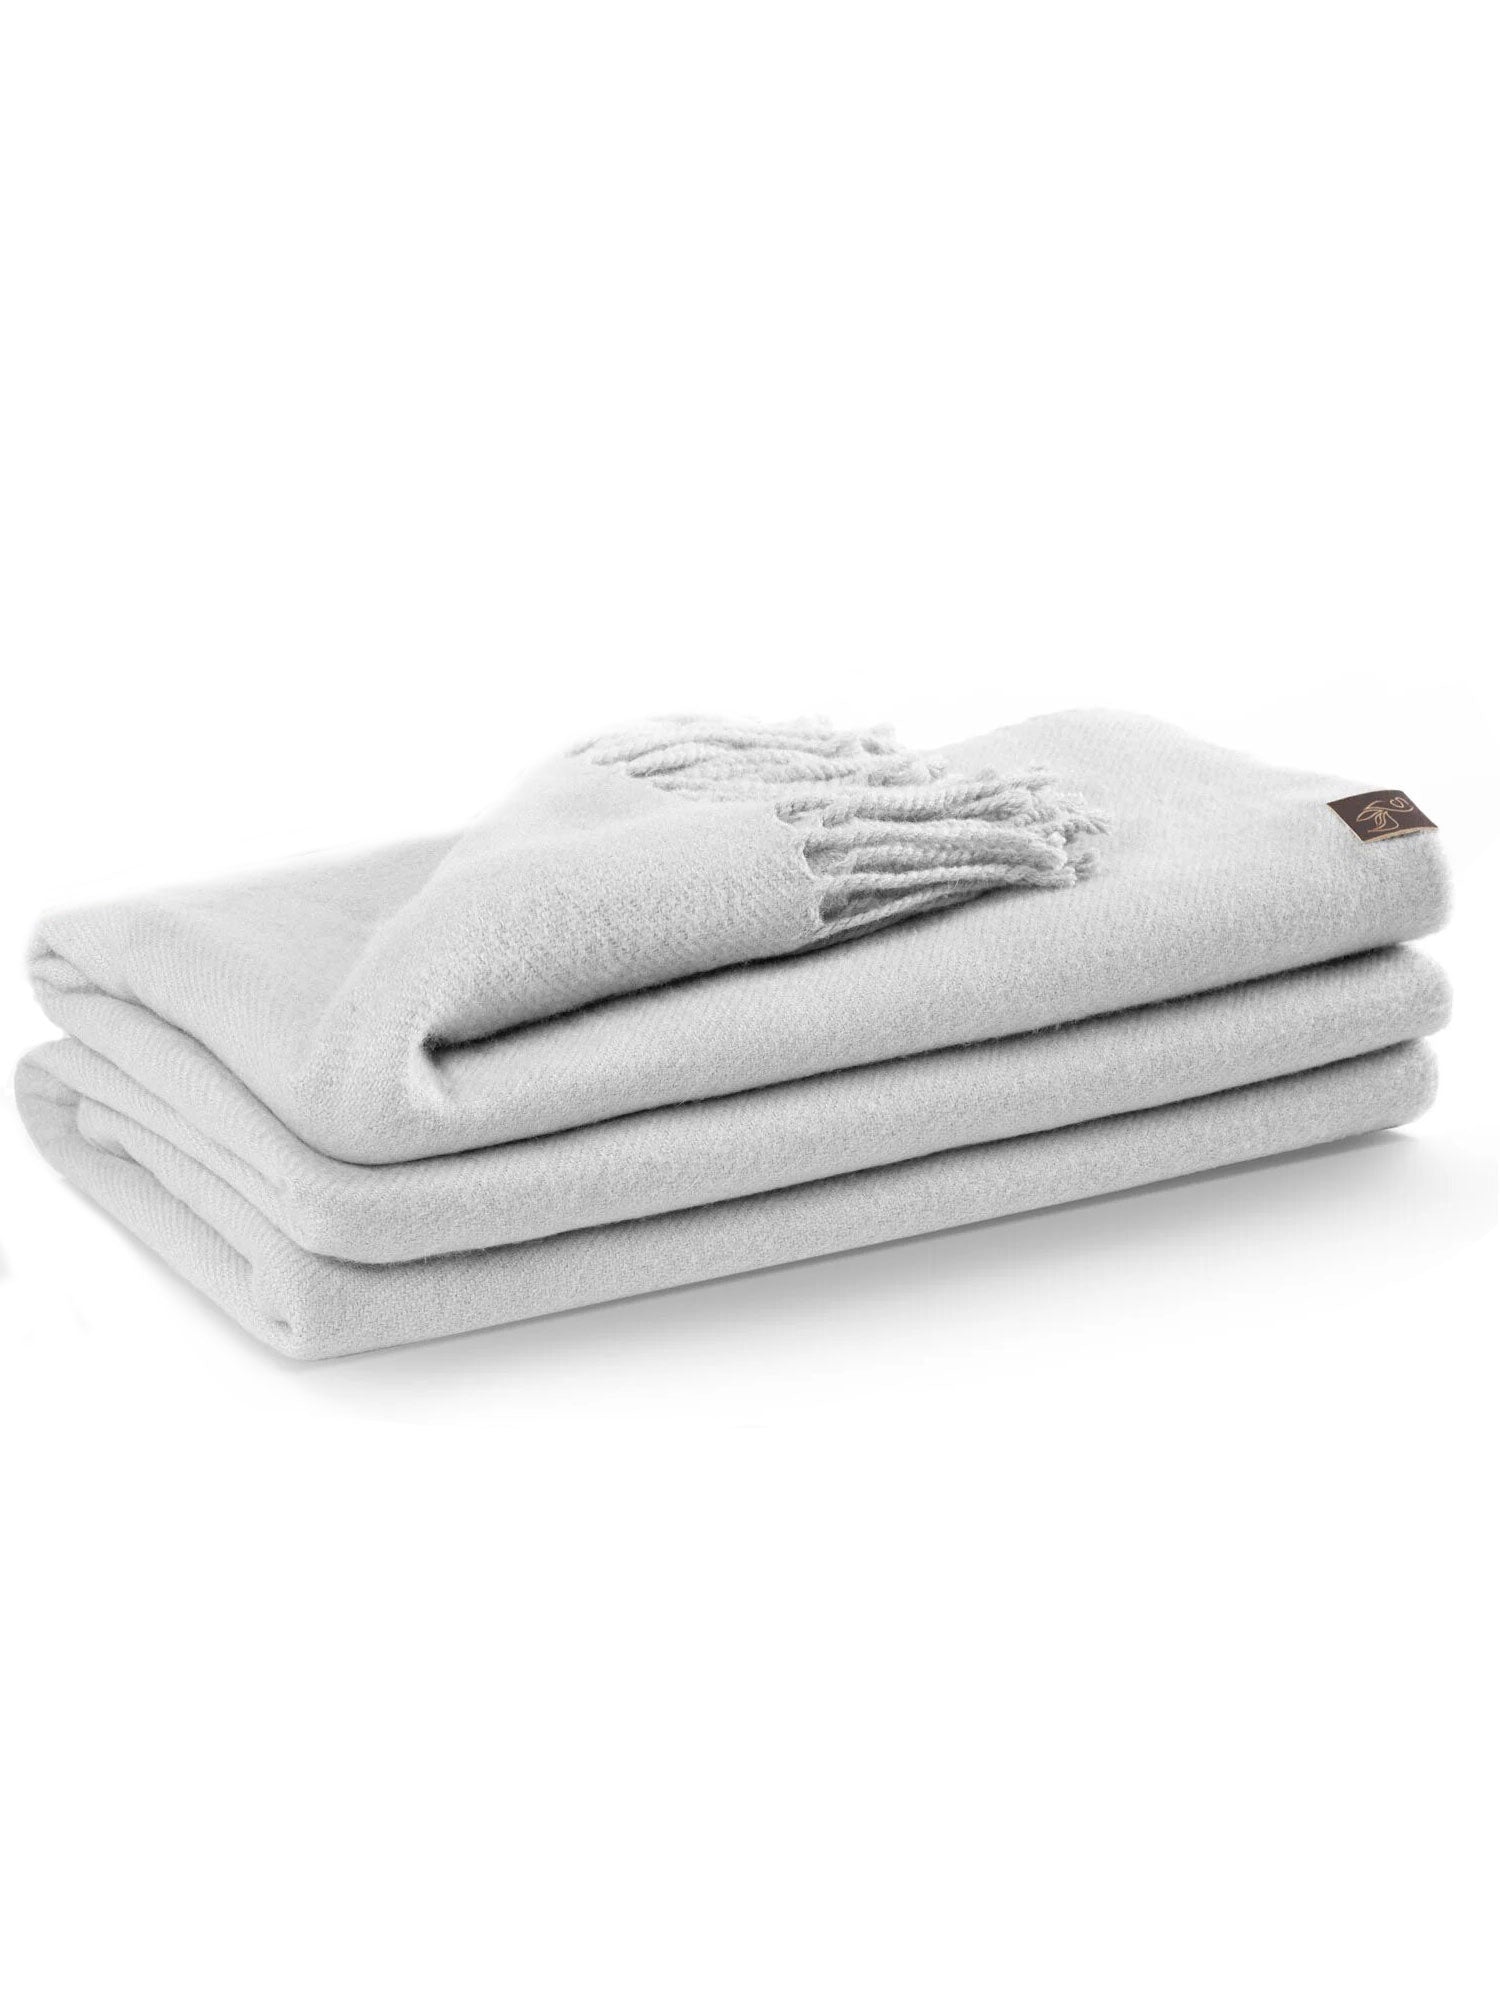 Inkari Alpaca Blanket - Elegante Silver